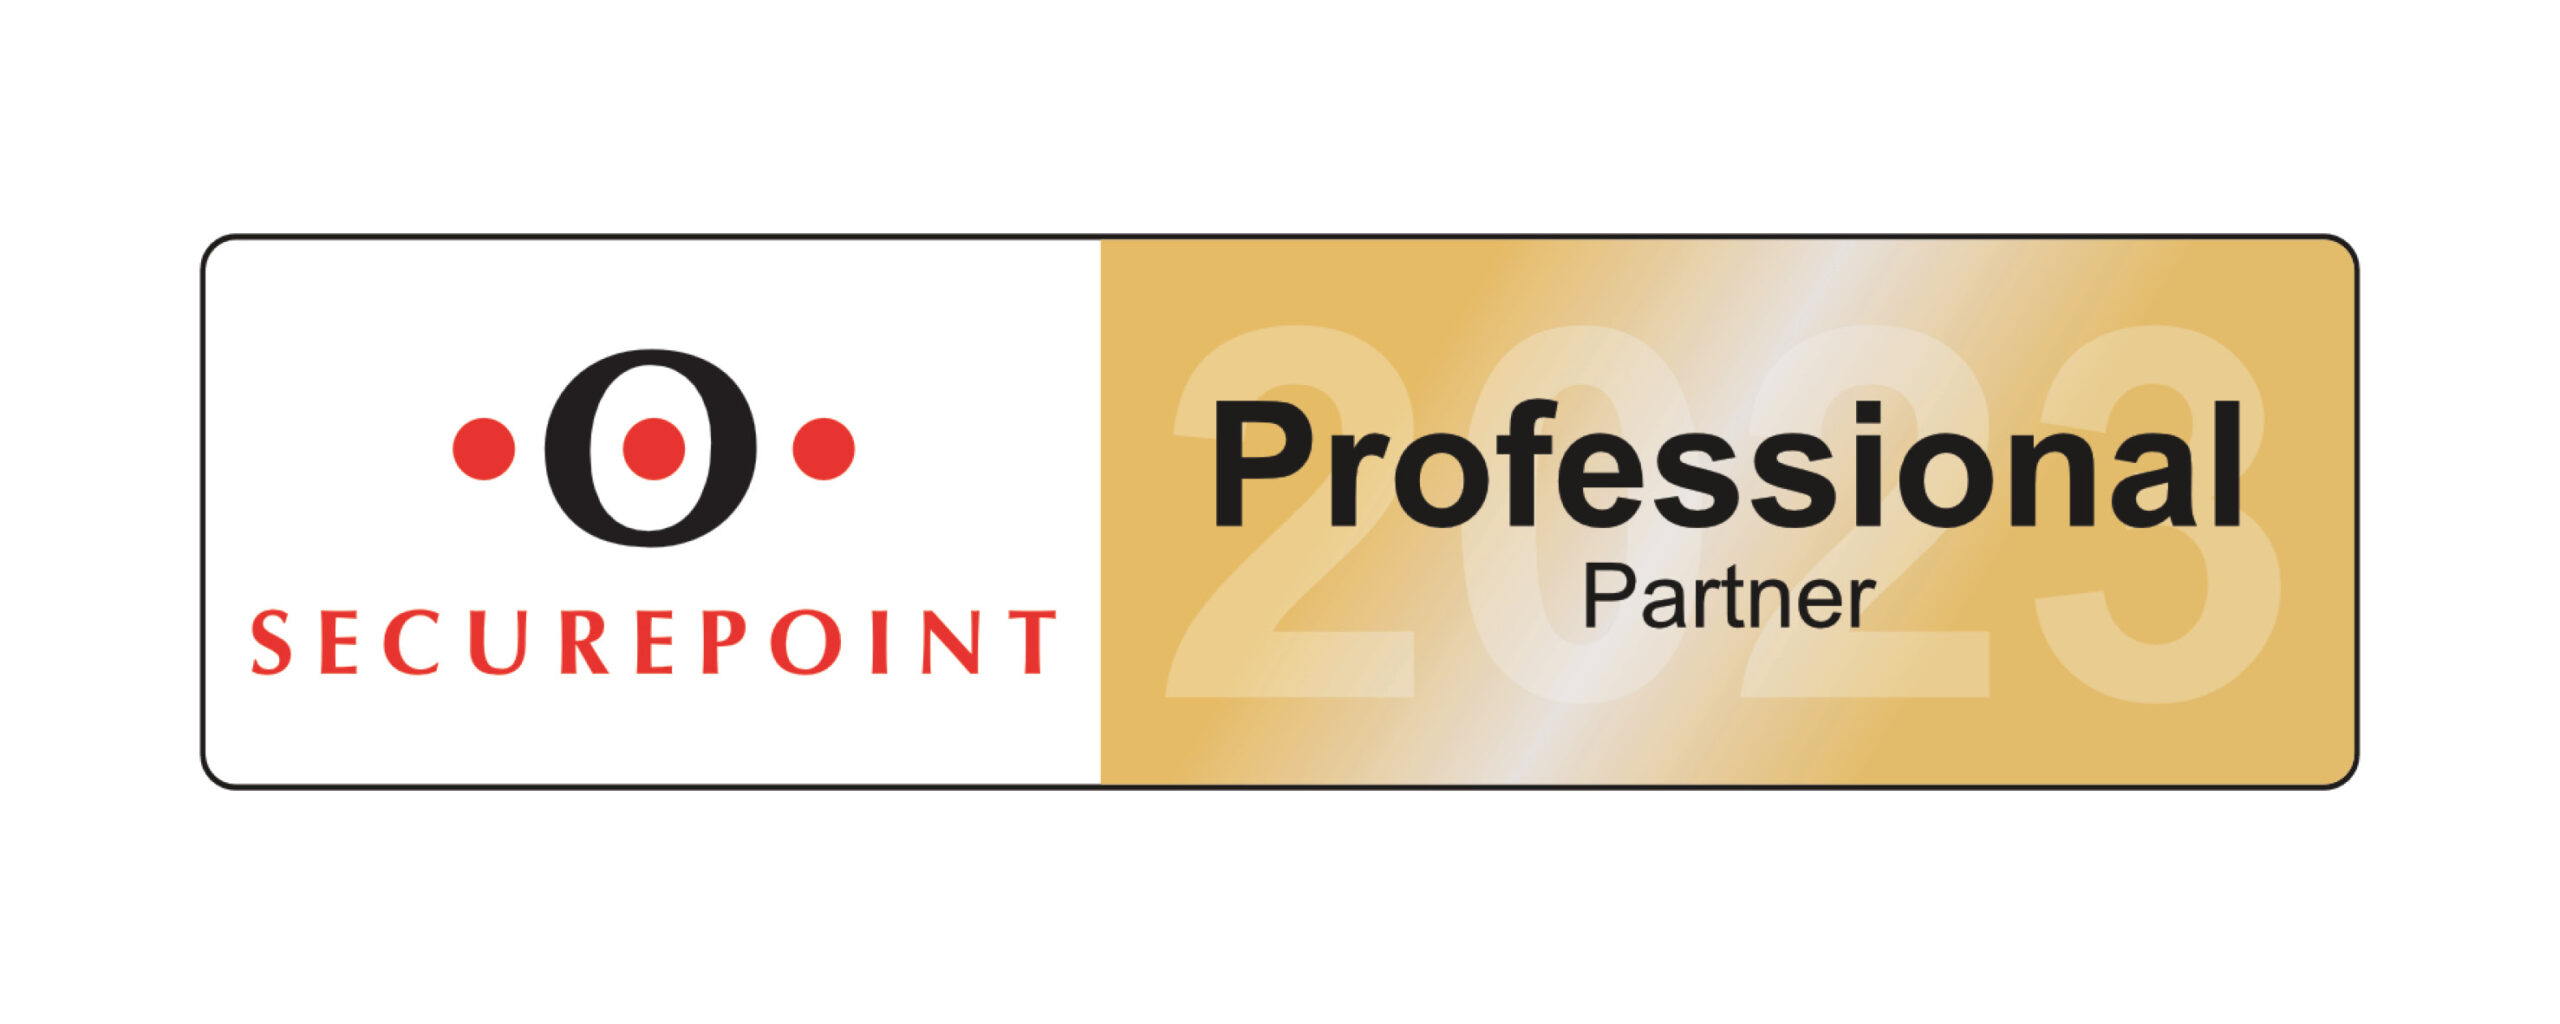 Securepoint Professional Partner